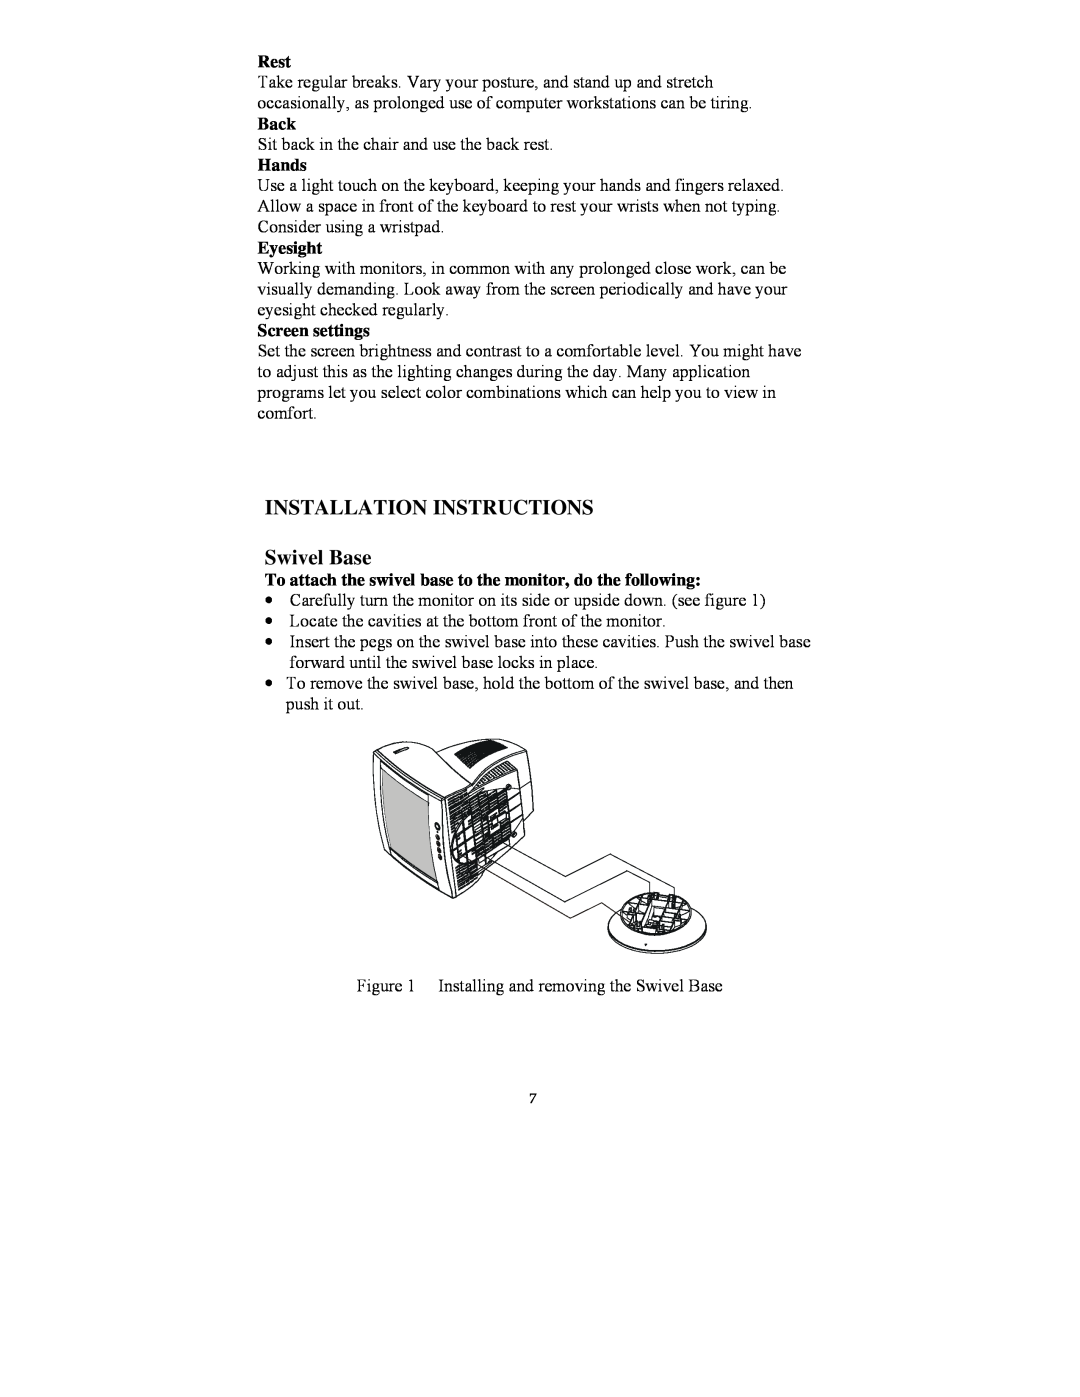 Lenovo E54 manual INSTALLATION INSTRUCTIONS Swivel Base, Rest, Back, Hands, Eyesight, Screen settings 